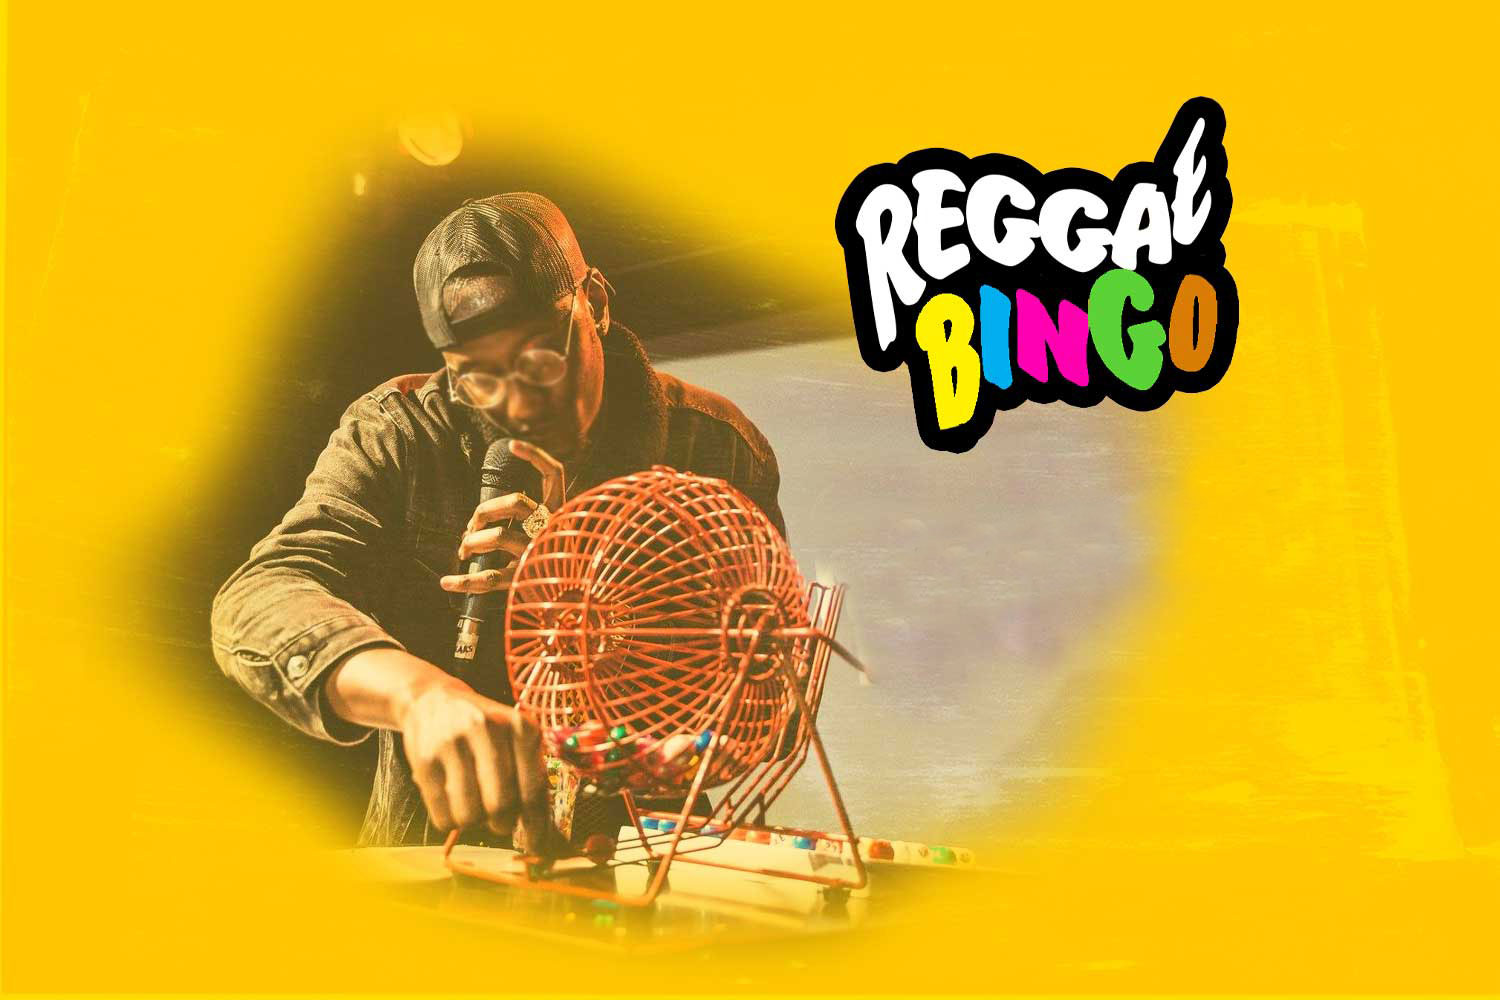 Fri, 5th Aug 2022 - Reggae Bingo